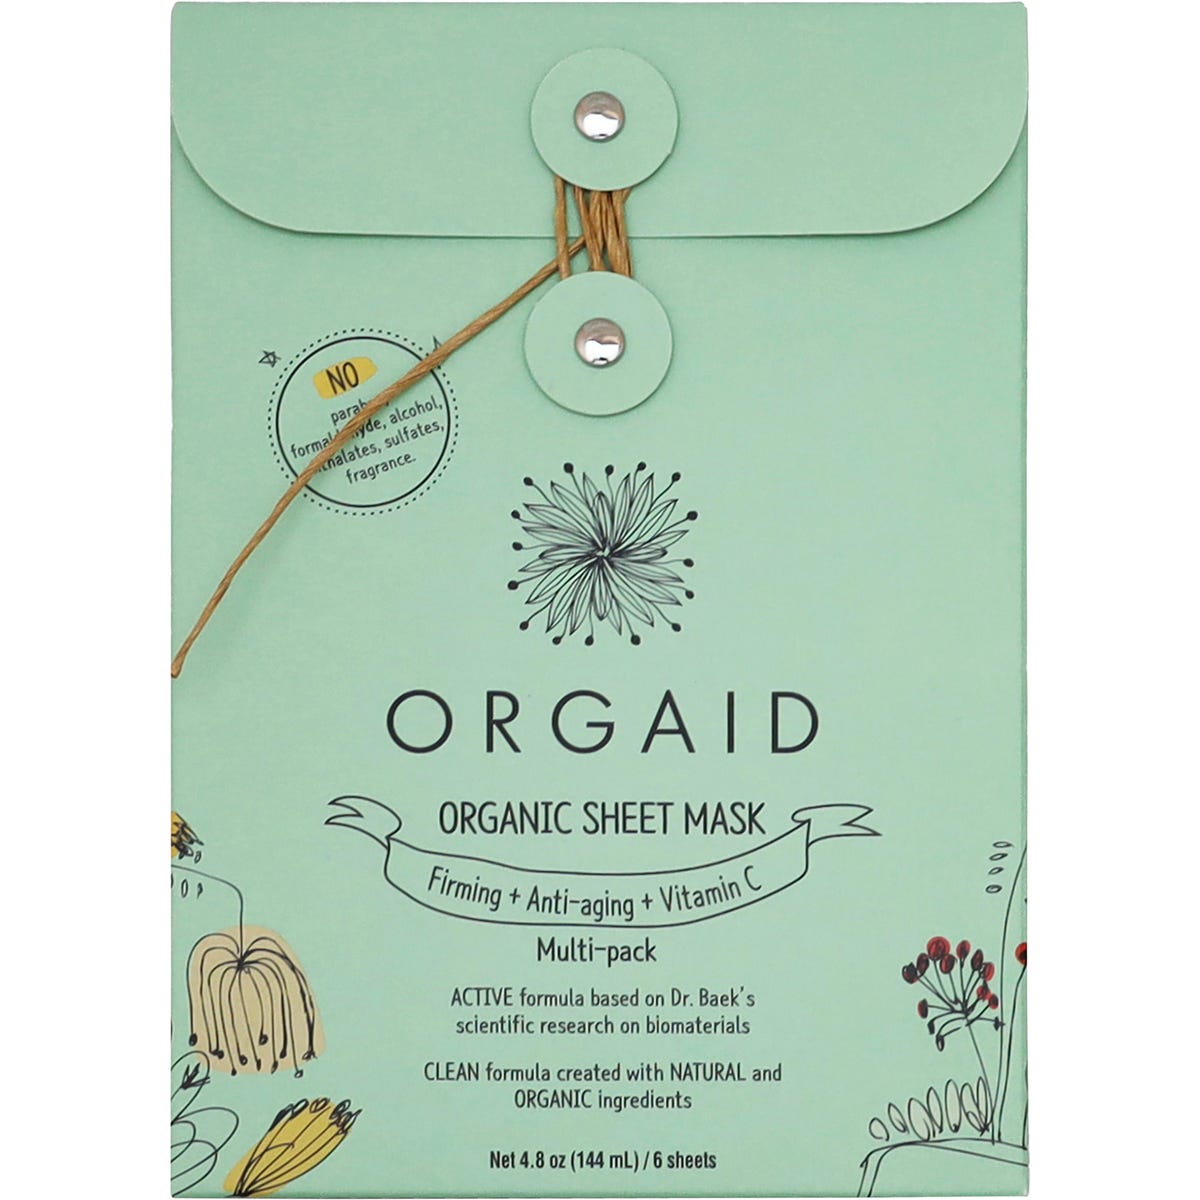 Orgaid Organic Sheet Mask Firming, Anti-Aging + Vitamin C 24ml - Dr Earth - Skincare